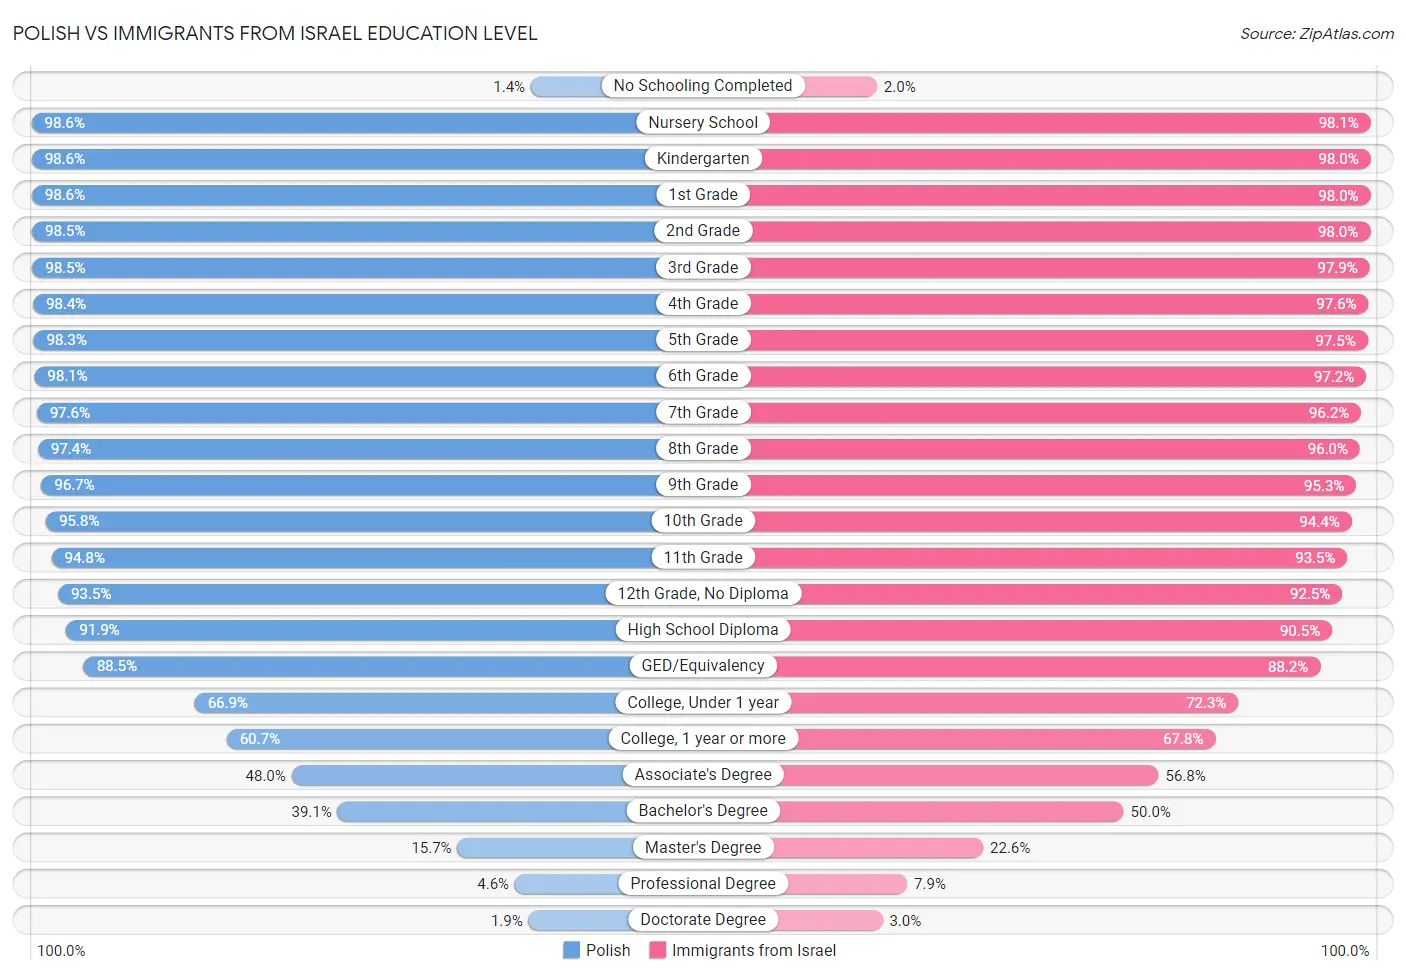 Polish vs Immigrants from Israel Education Level